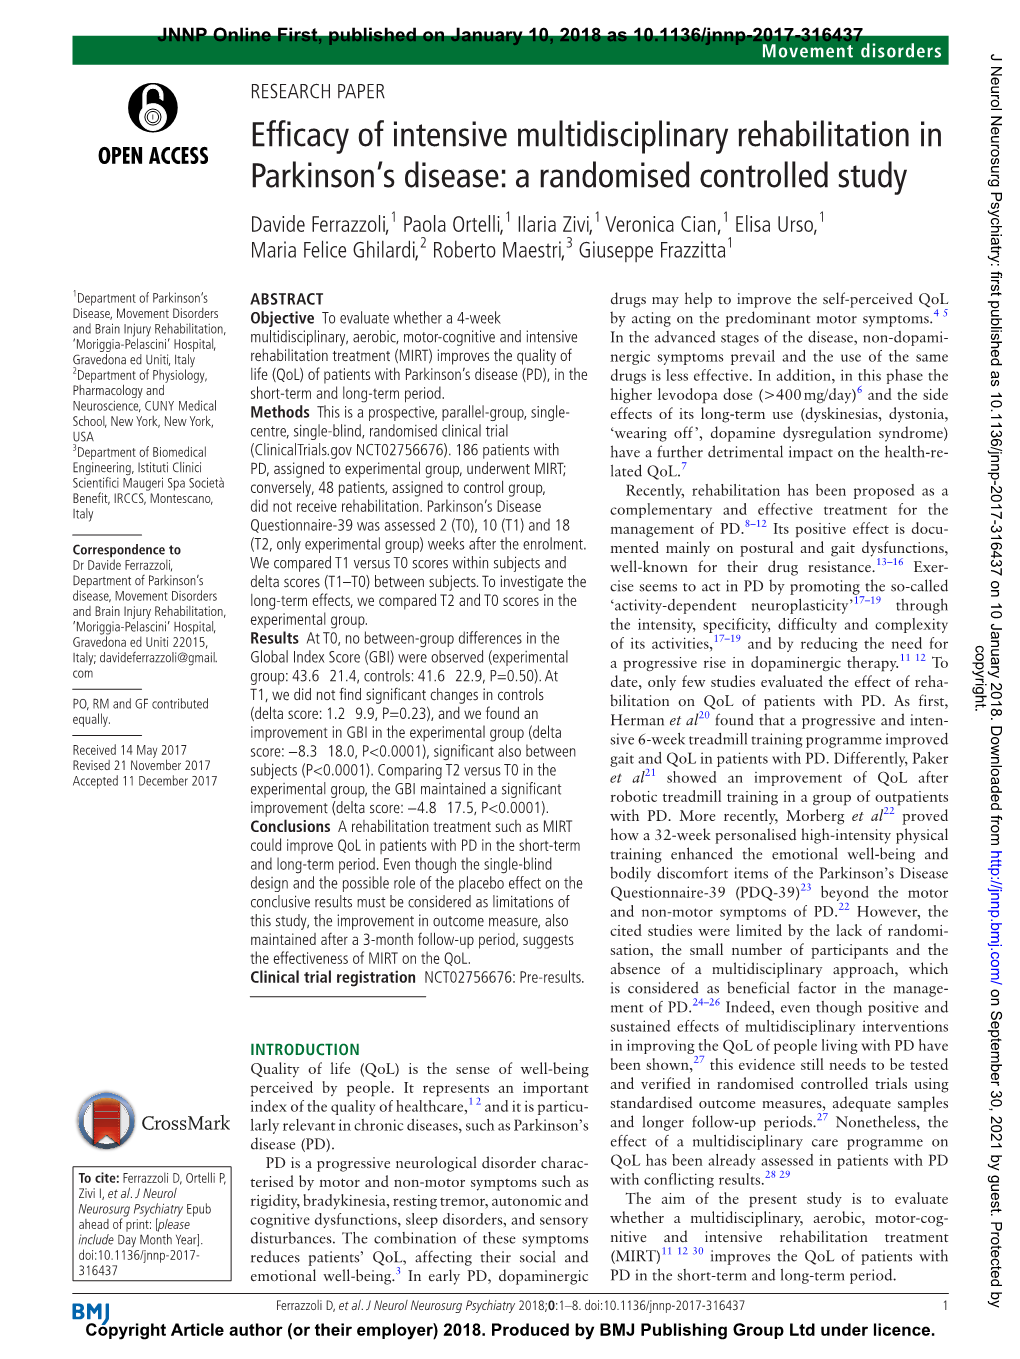 Efficacy of Intensive Multidisciplinary Rehabilitation in Parkinson's Disease